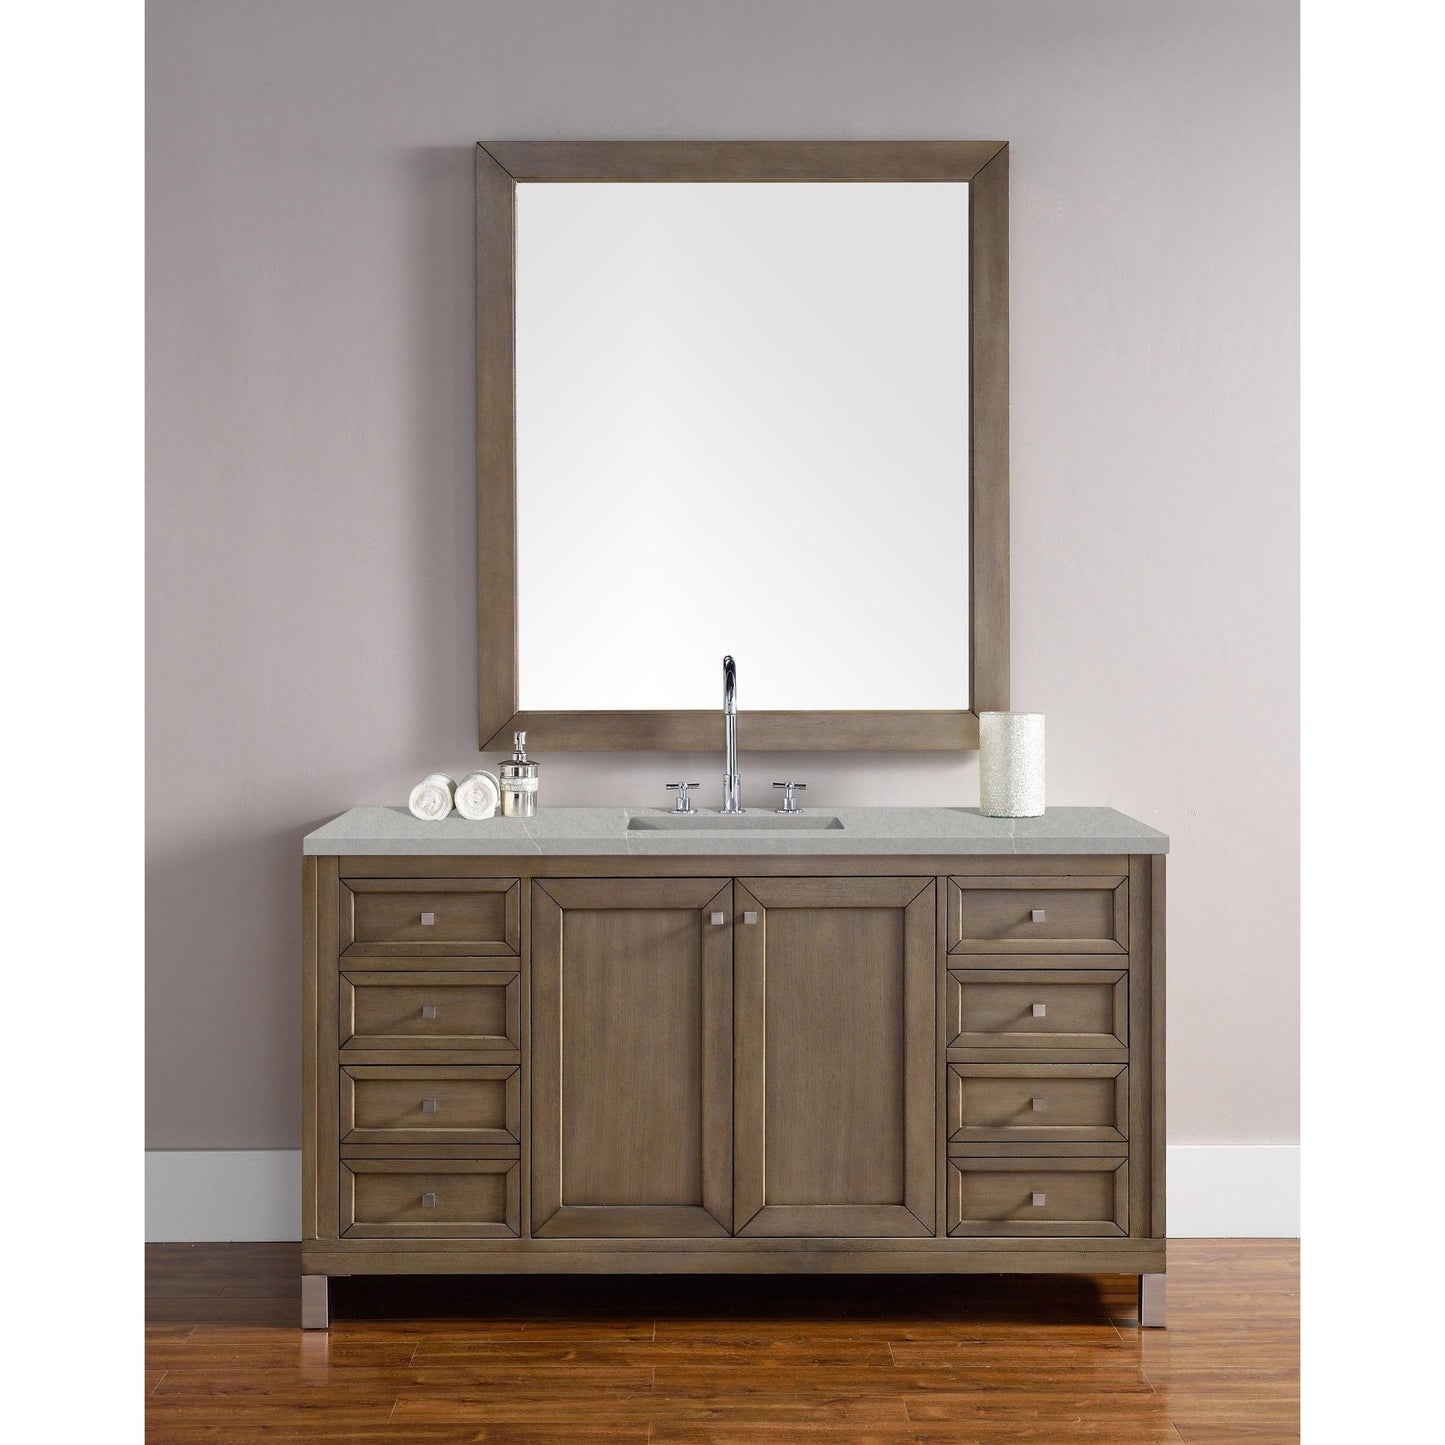 James Martin Chicago 60" Single Whitewashed Walnut Bathroom Vanity With 1" Eternal Serena Quartz Top and Rectangular Ceramic Sink